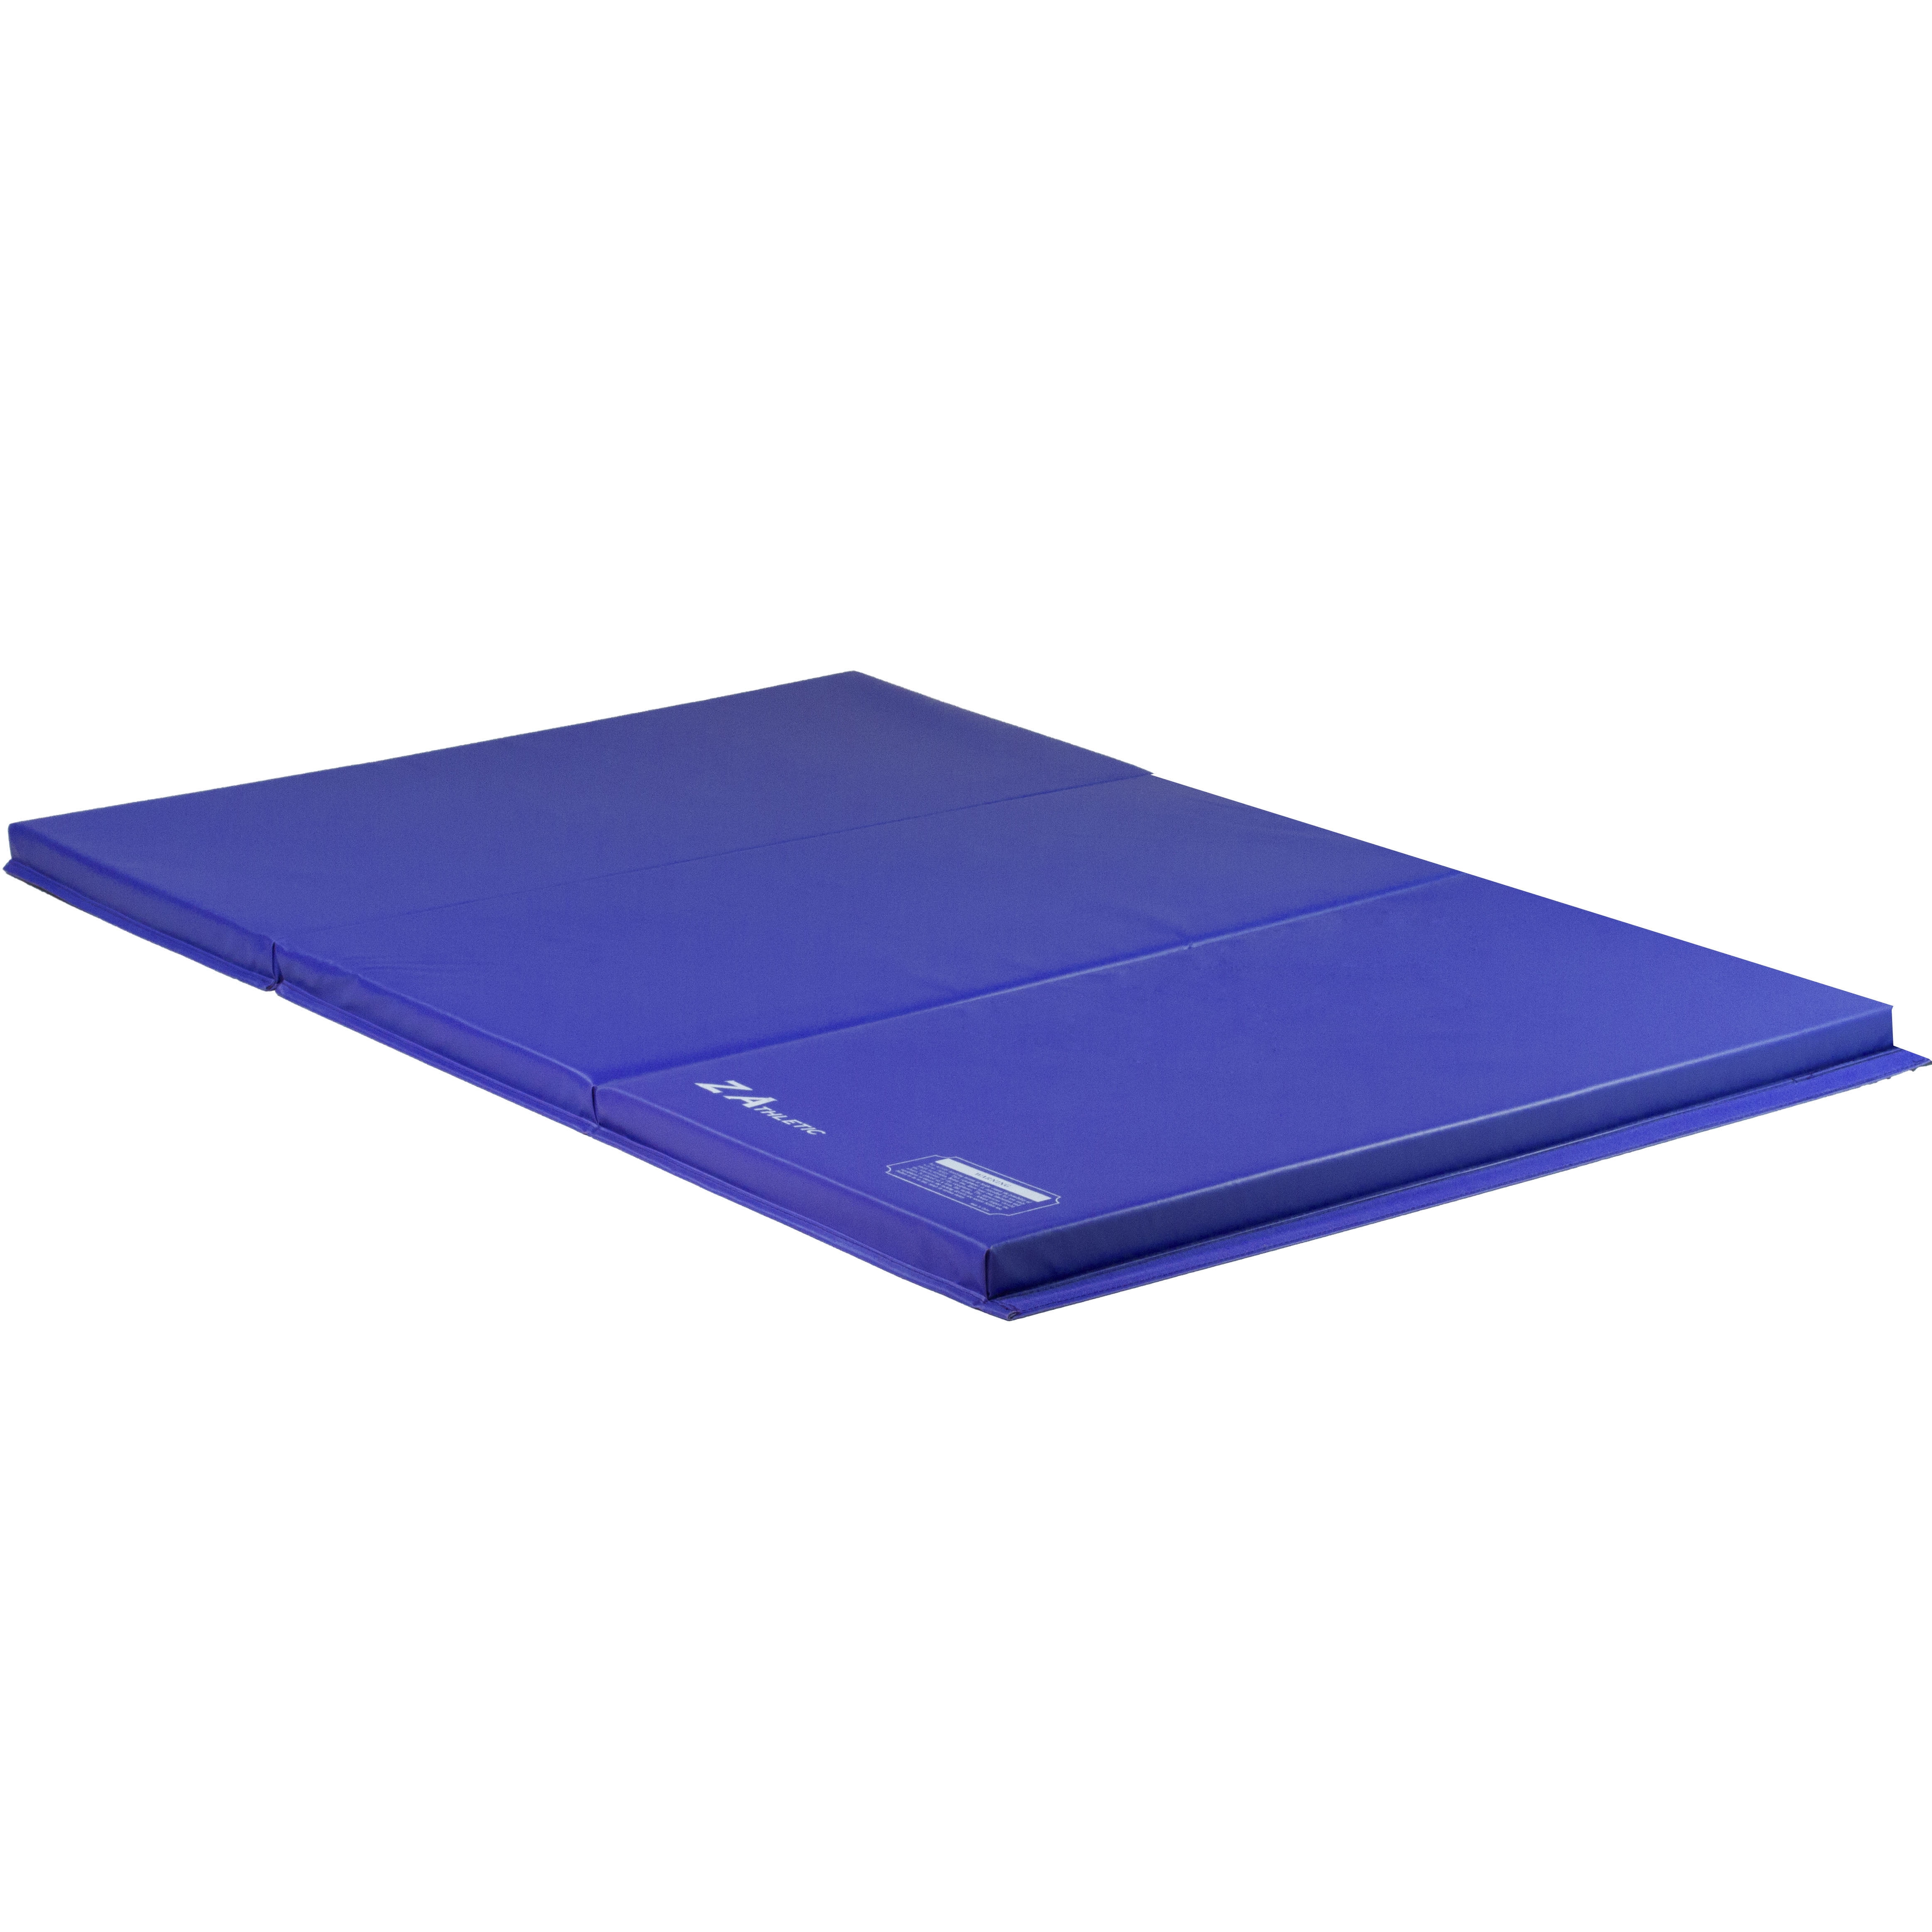 blue gymnastics mat